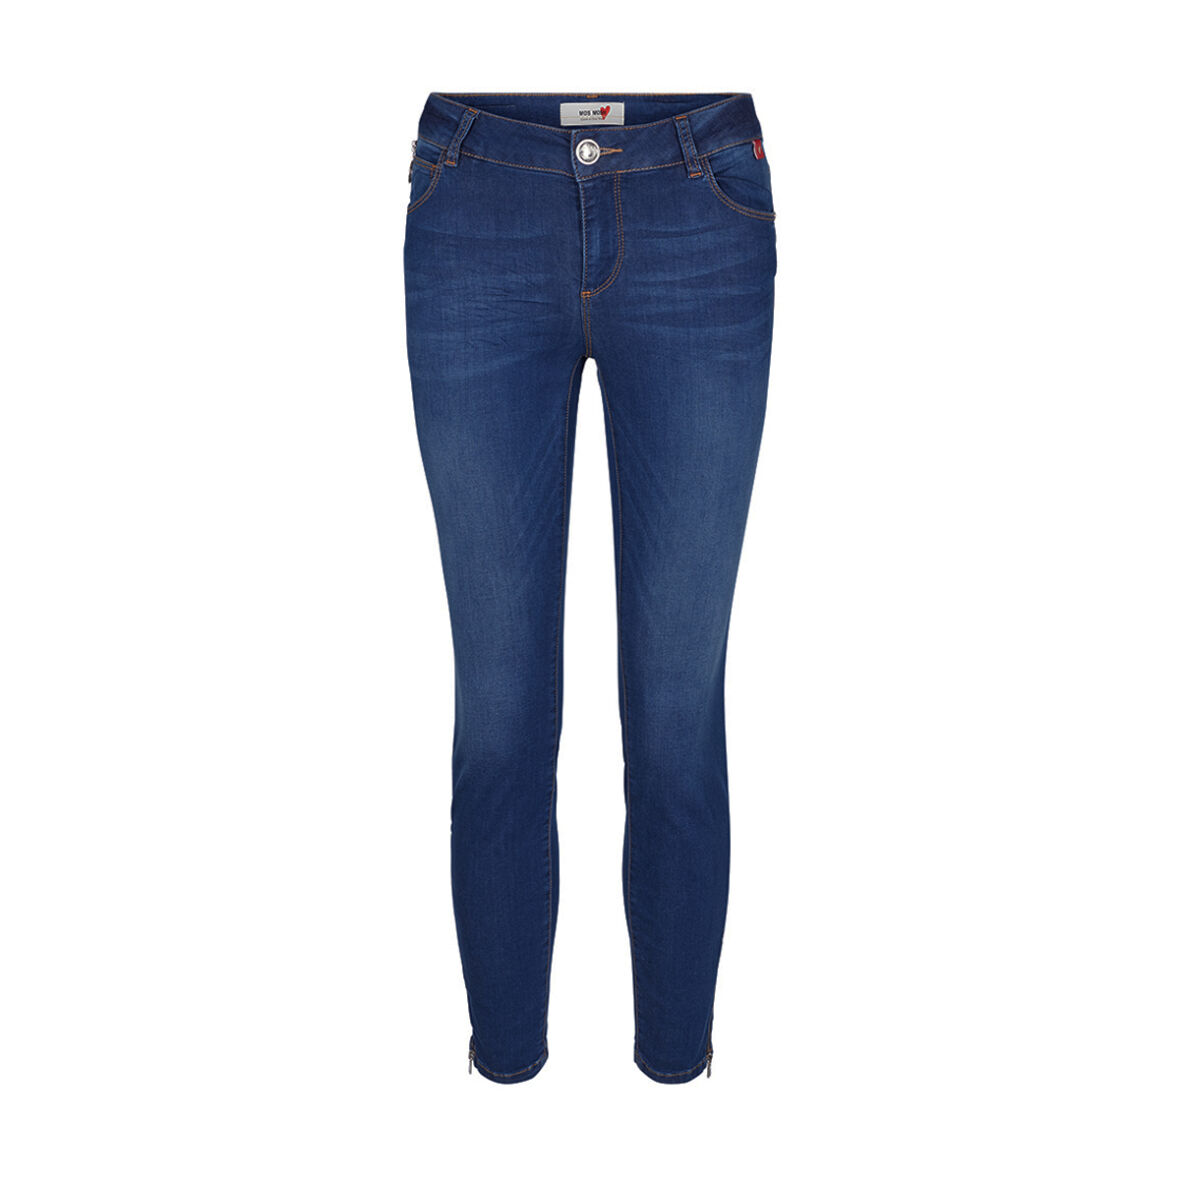 MOS MOSH - Sateen Jeans Blå Denim - - GRATIS FRAGT